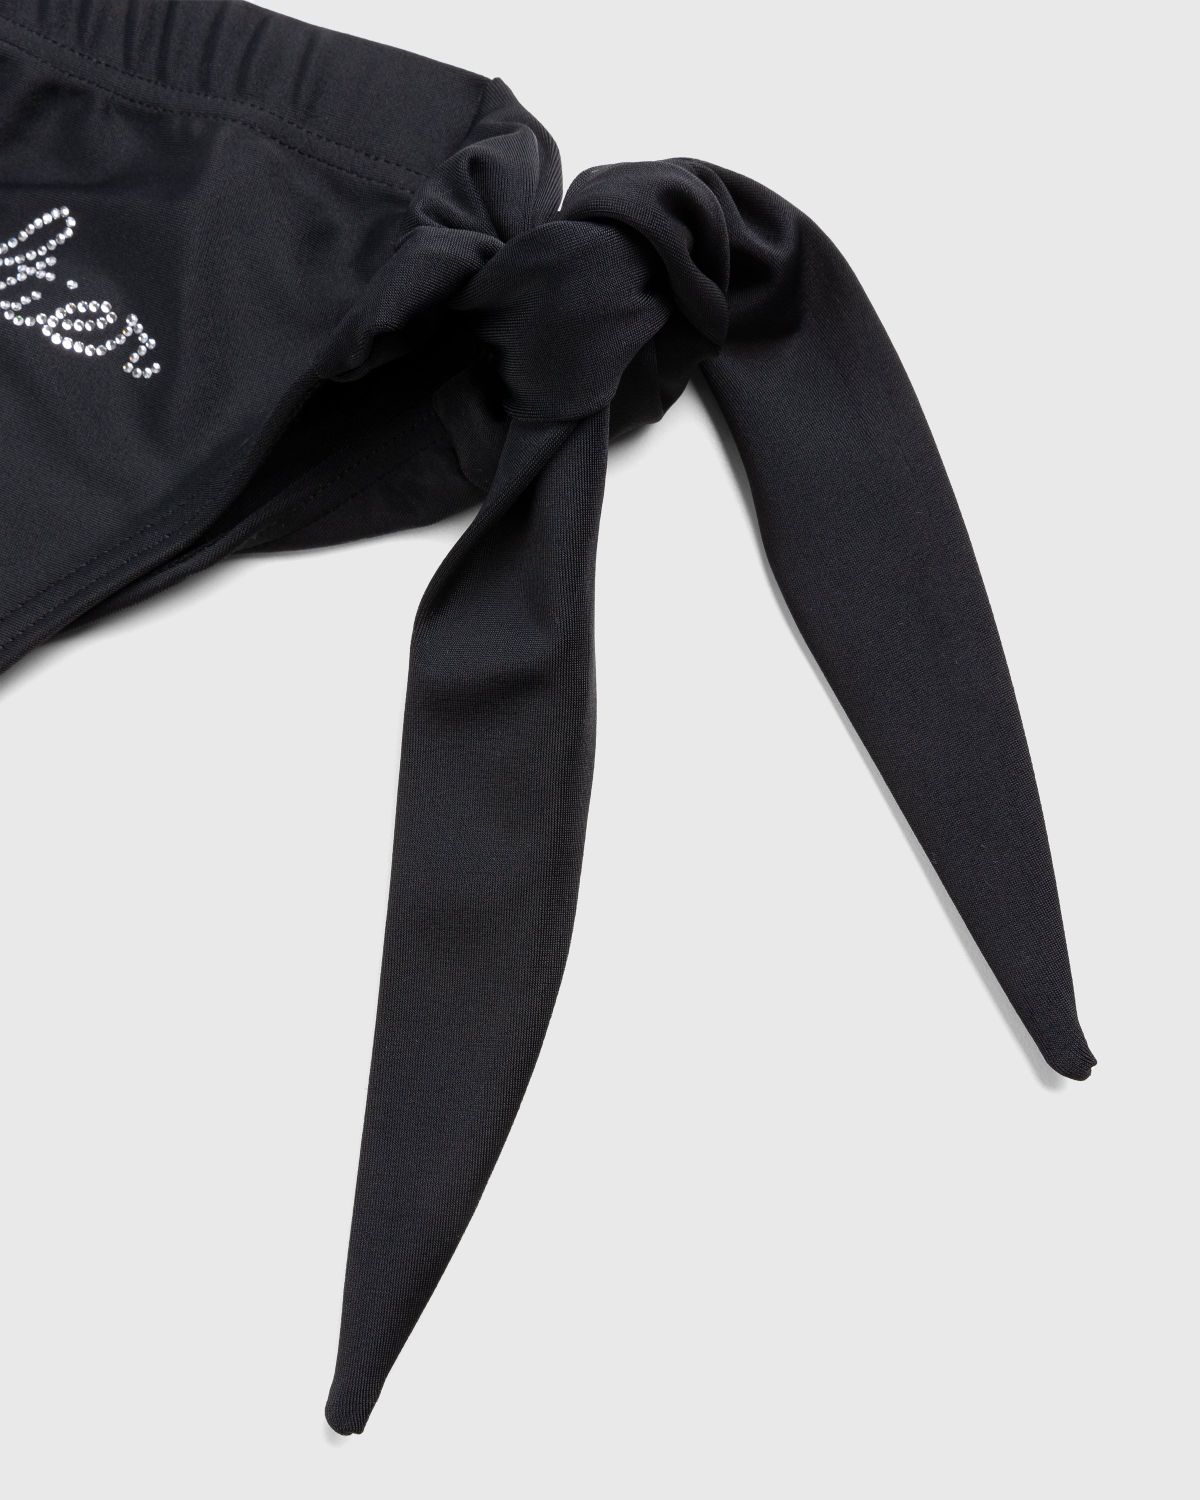 Jean Paul Gaultier – Rhinestone Logo Bikini Bottom Black - Swimwear - Black - Image 3